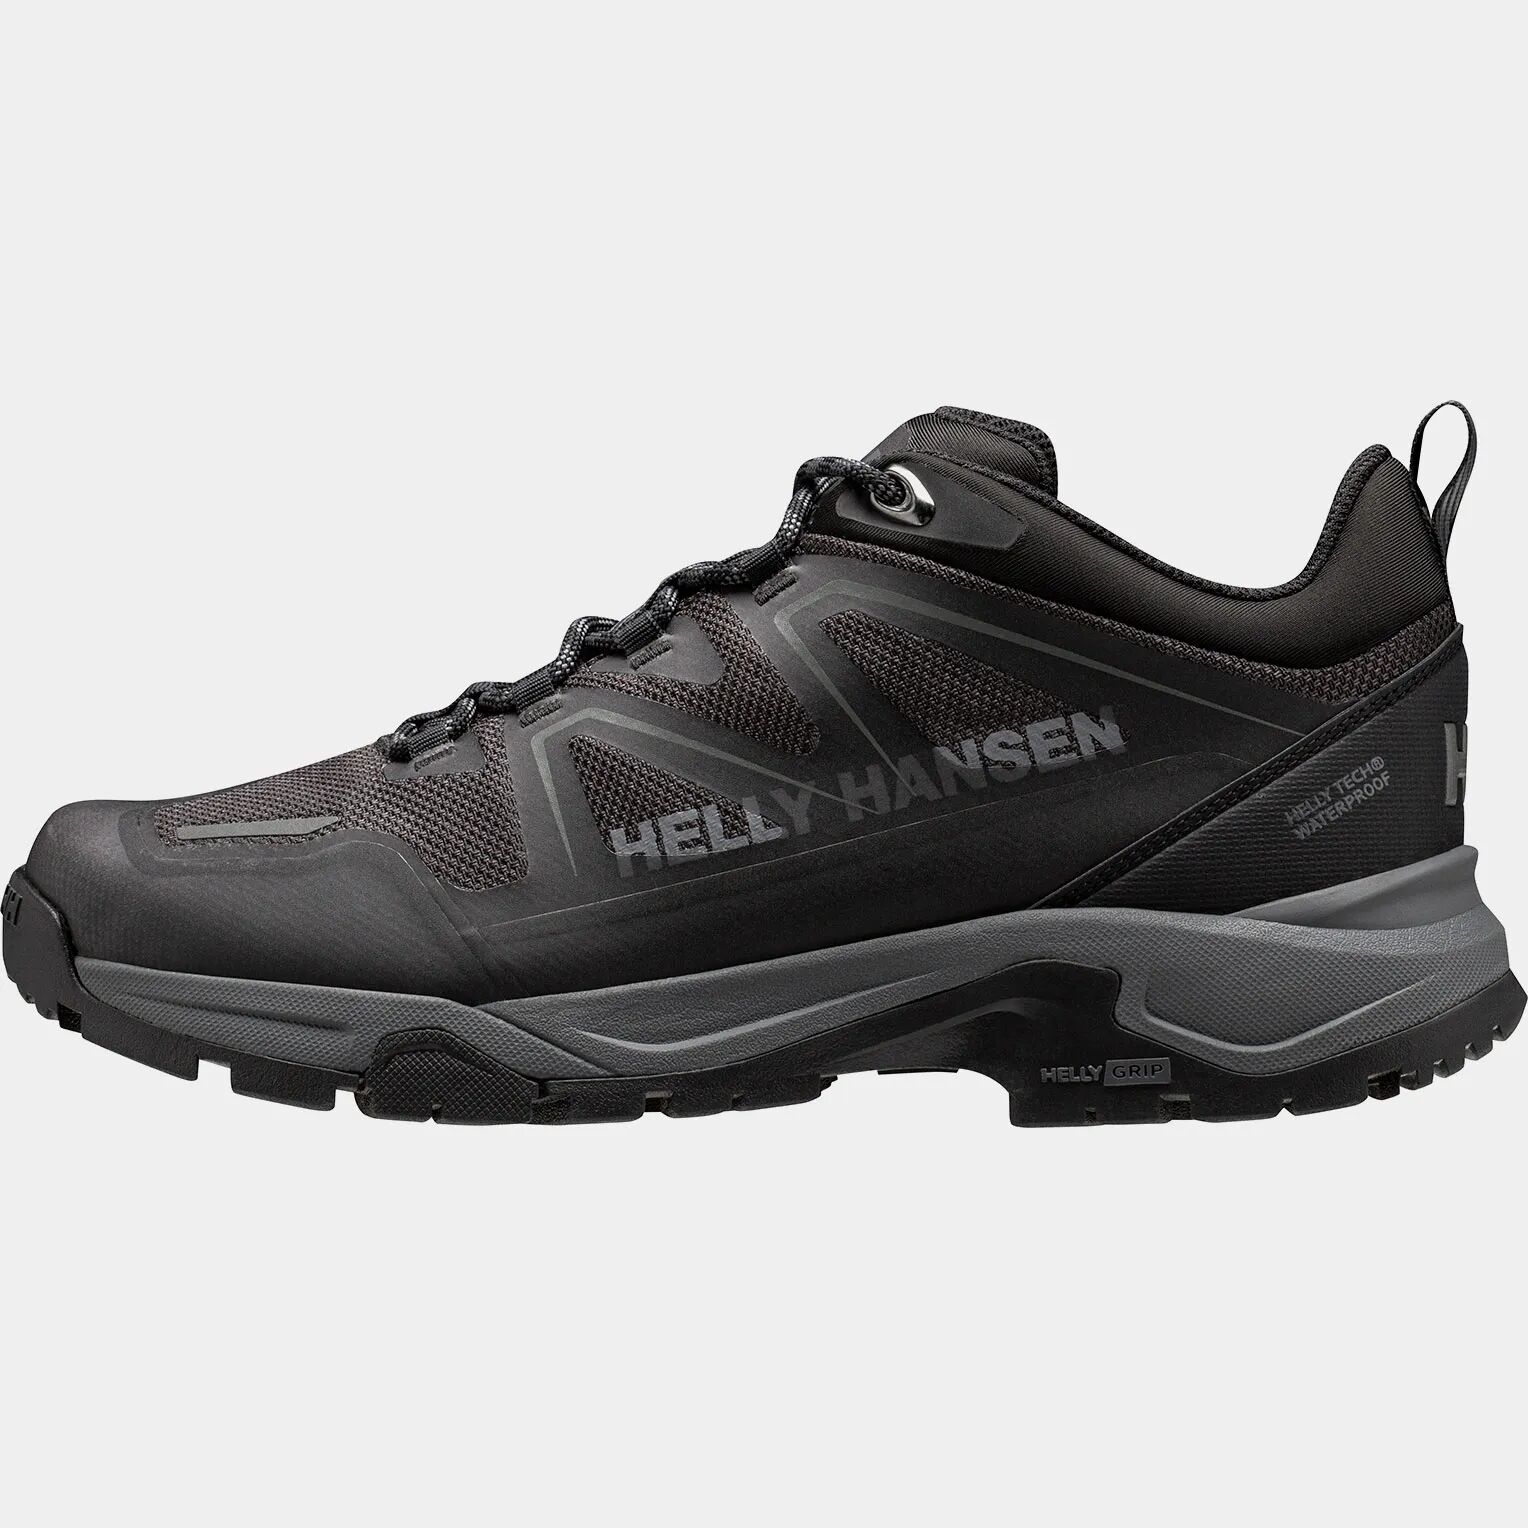 Helly Hansen Men's Cascade Low Helly Tech Hiking Shoes Black 8.5 - Blackcharc Black - Male